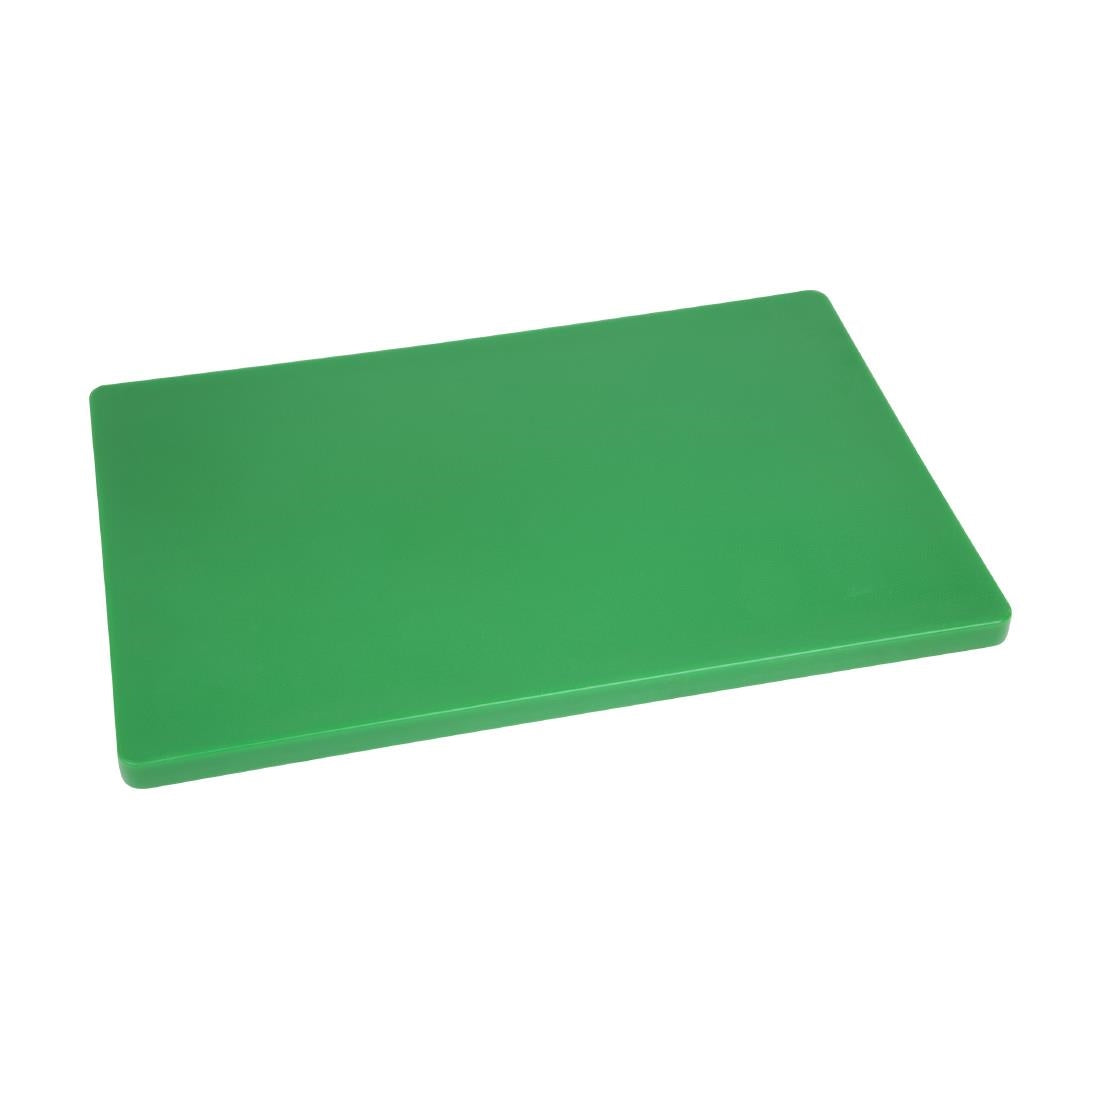 DM006 Hygiplas Extra Thick Low Density Green Chopping Board Standard JD Catering Equipment Solutions Ltd